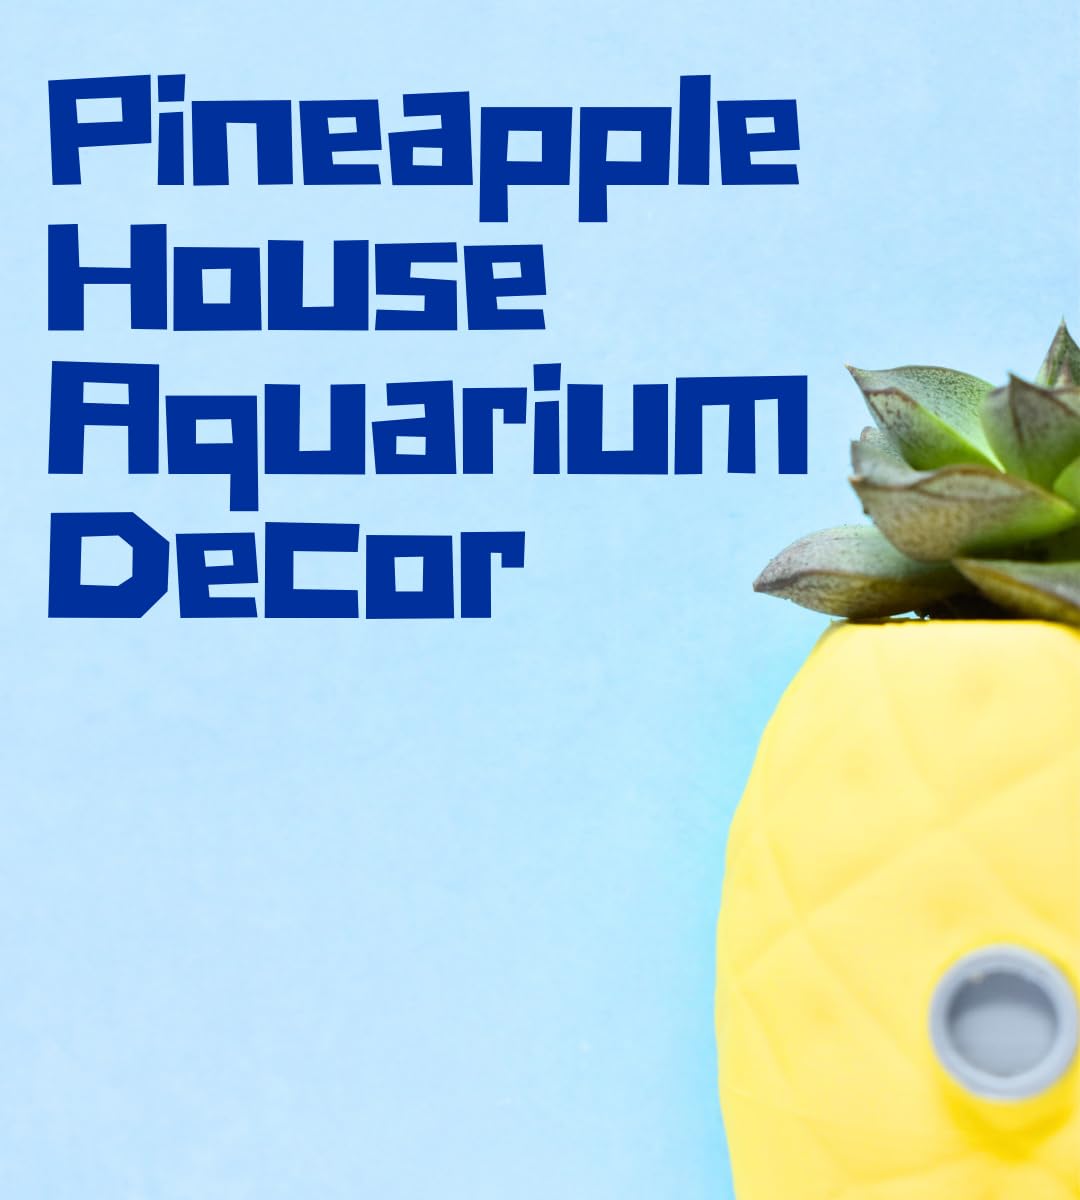 FRESHe Spongebob Pineapple aqarium Decor